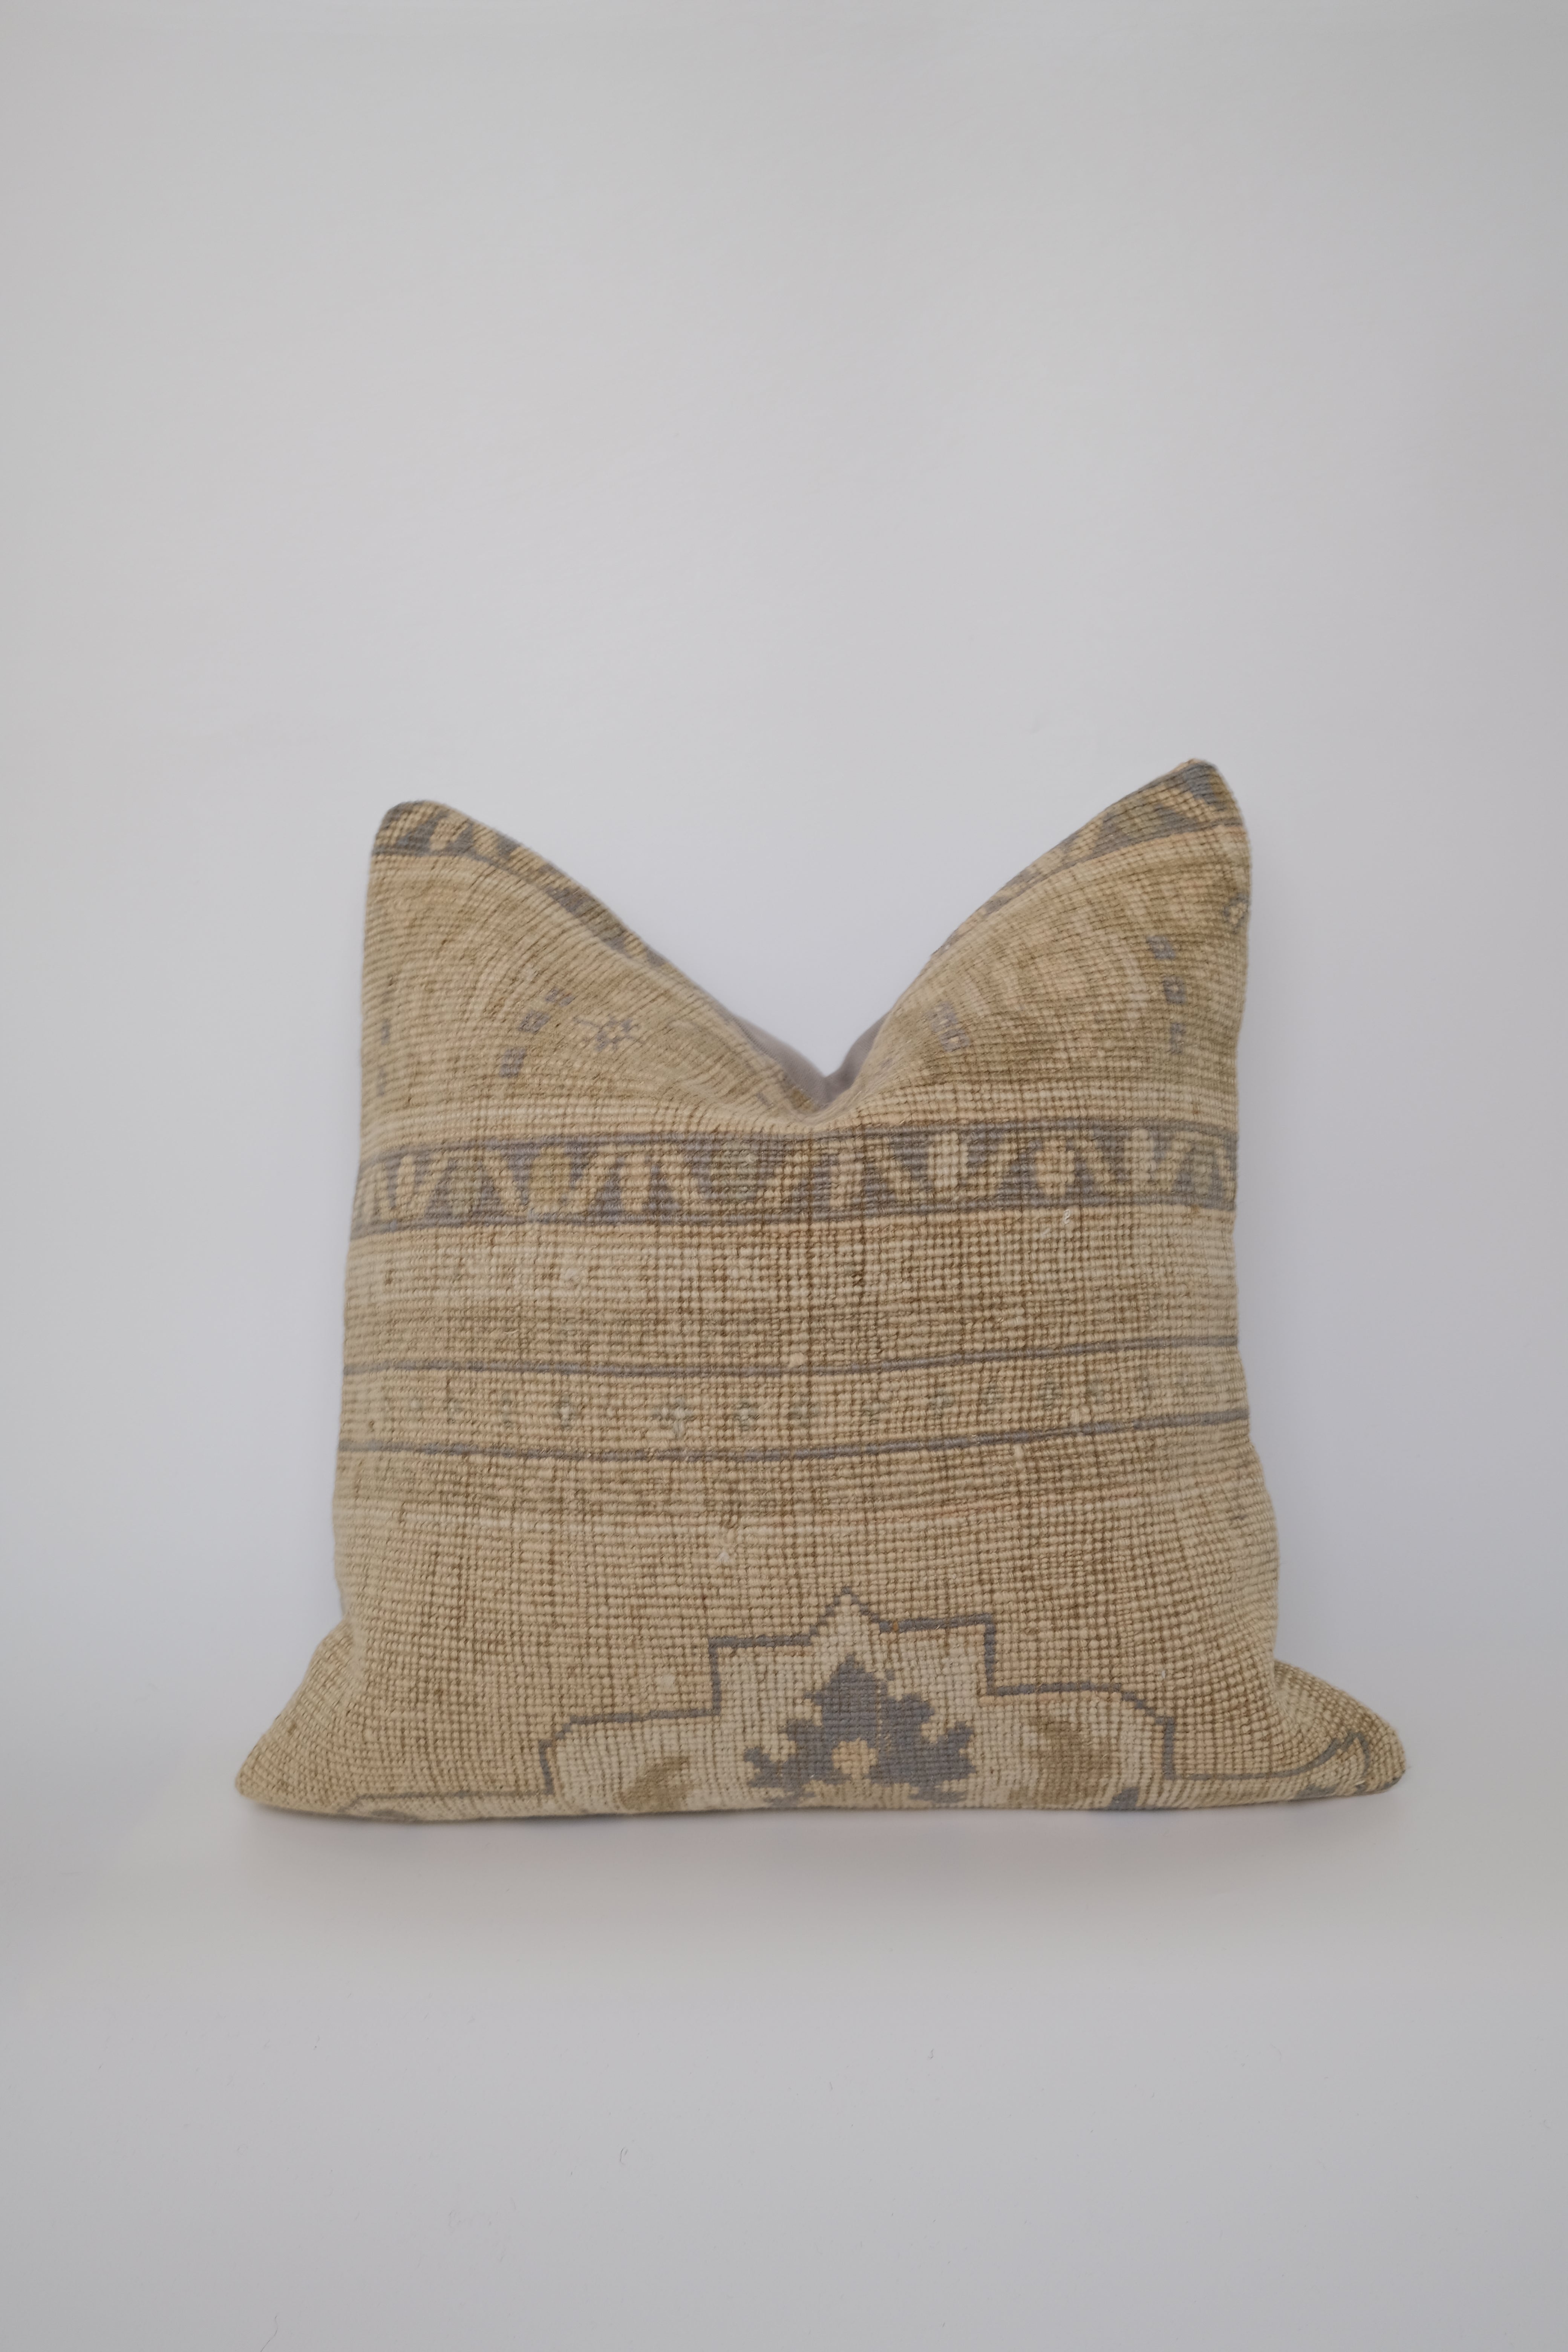 Eren Turkish Vintage Rug Pillow